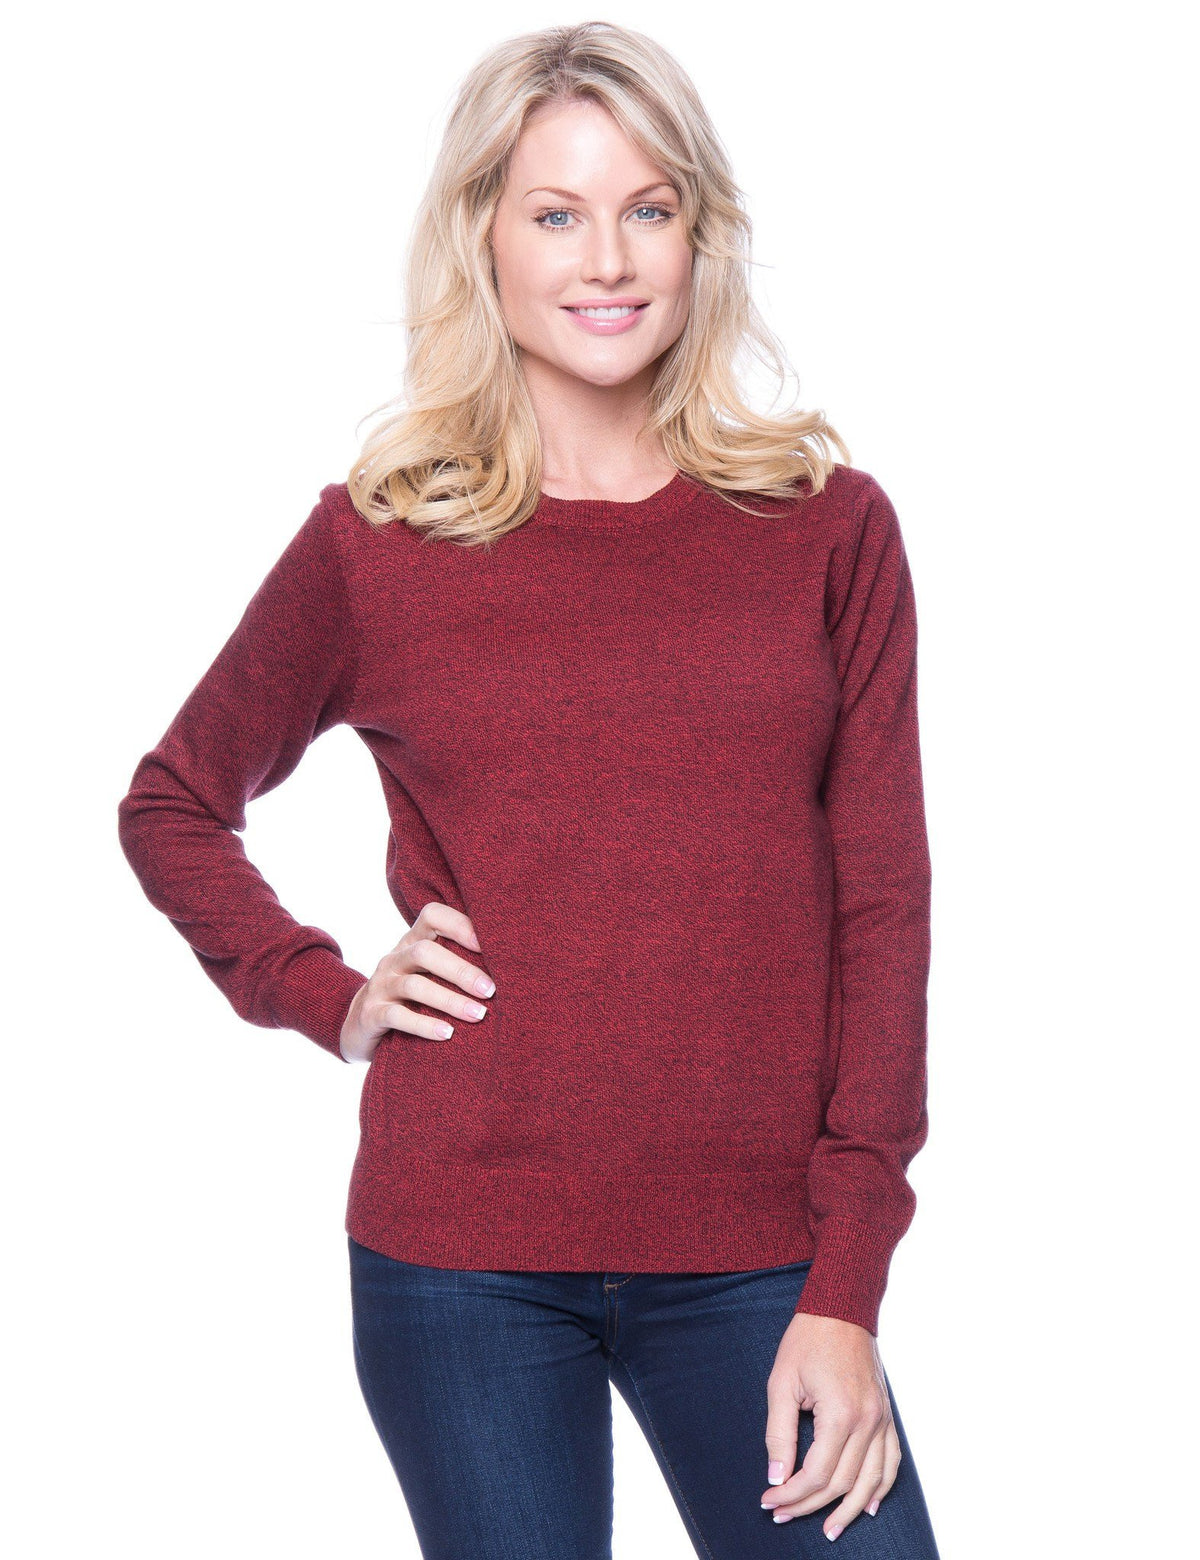 Women's Premium Cotton Crew Neck Sweater - Marl Red/Black